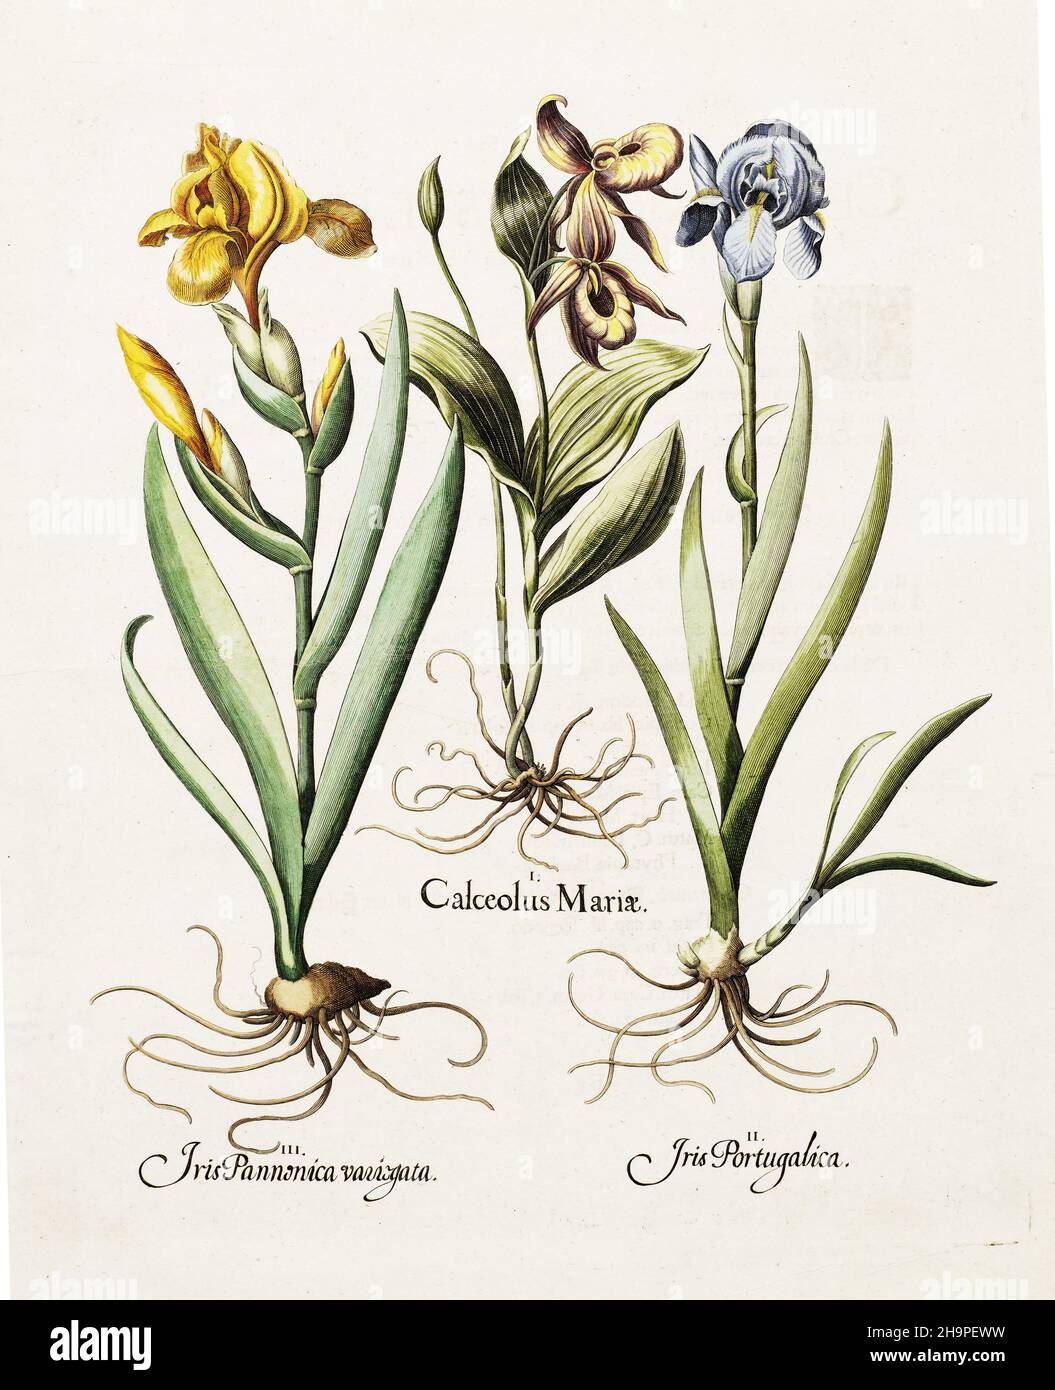 Basilic Besler - calcéolus Mariae (Ladies Slipper) - Iris Pannonica Varigata (Iris à barbe variégée foncée) - Iris Portugalica (barbu variégée bleue) Banque D'Images